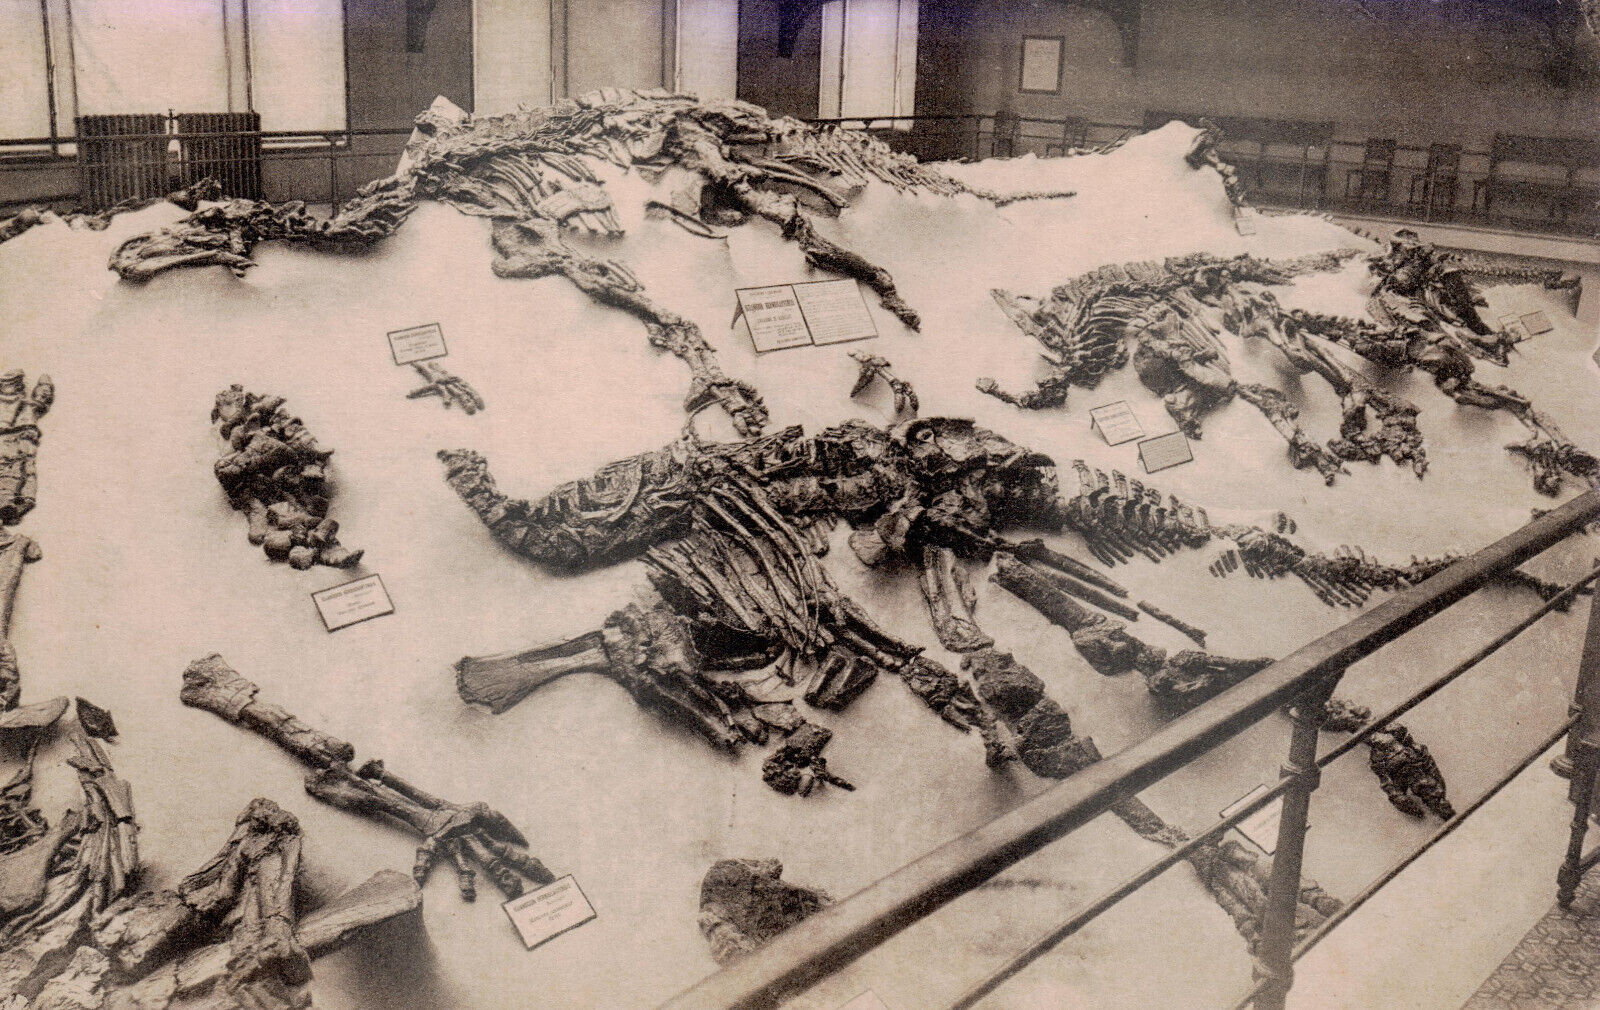 Brussels Natural Museum, dinosaur skeletons, Belgium, old postcard